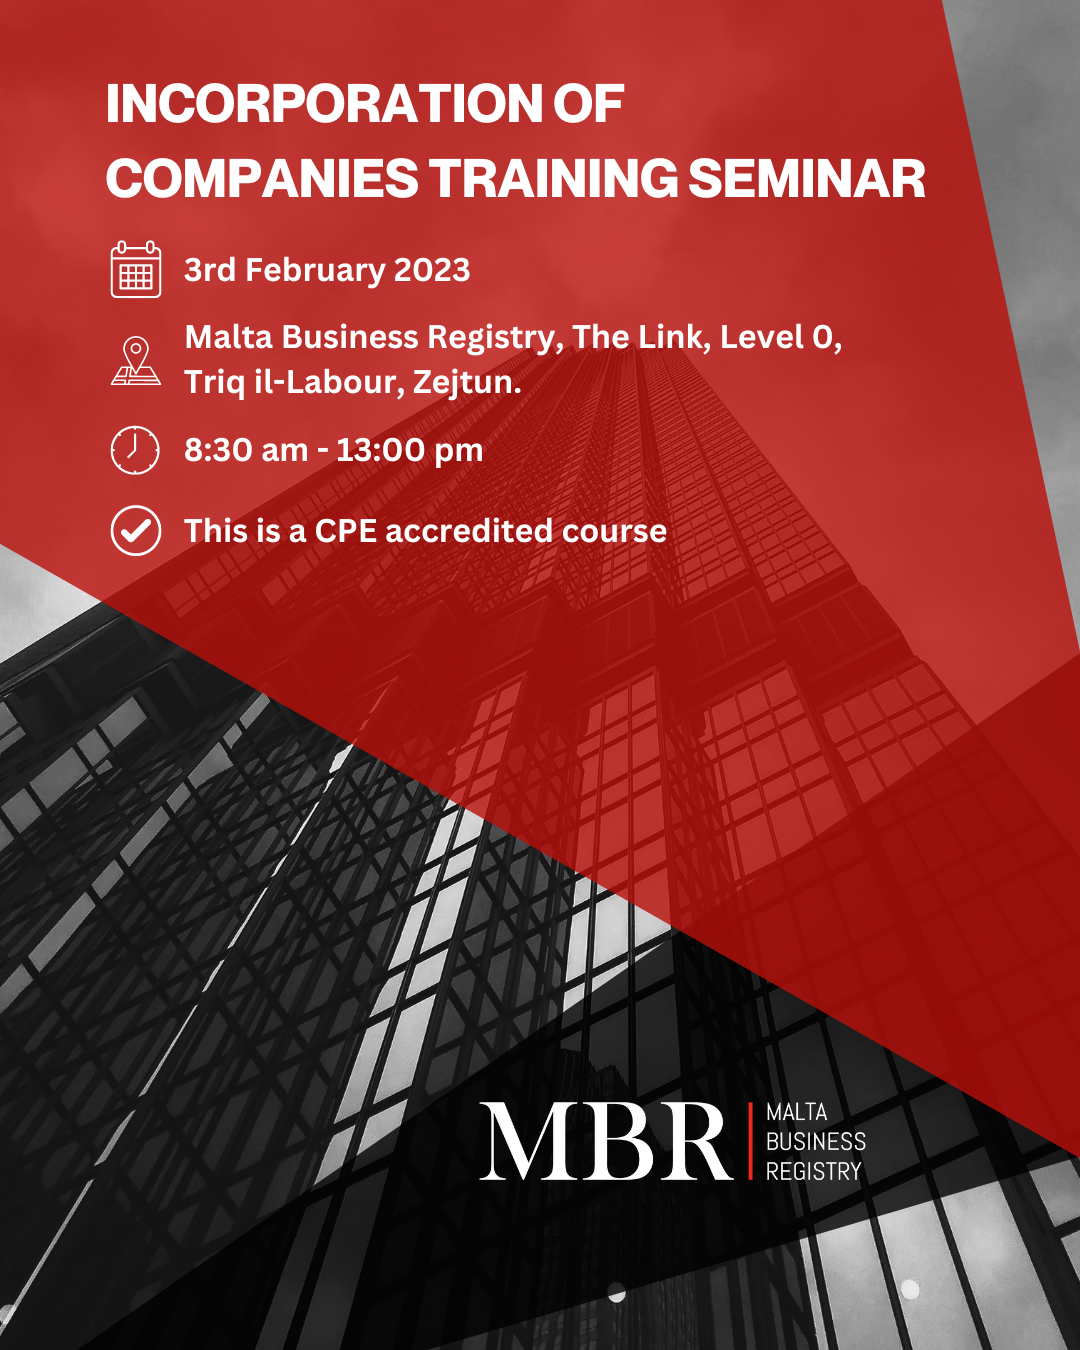 The Malta Business Registry Training Seminar - Incorporation of Companies poster